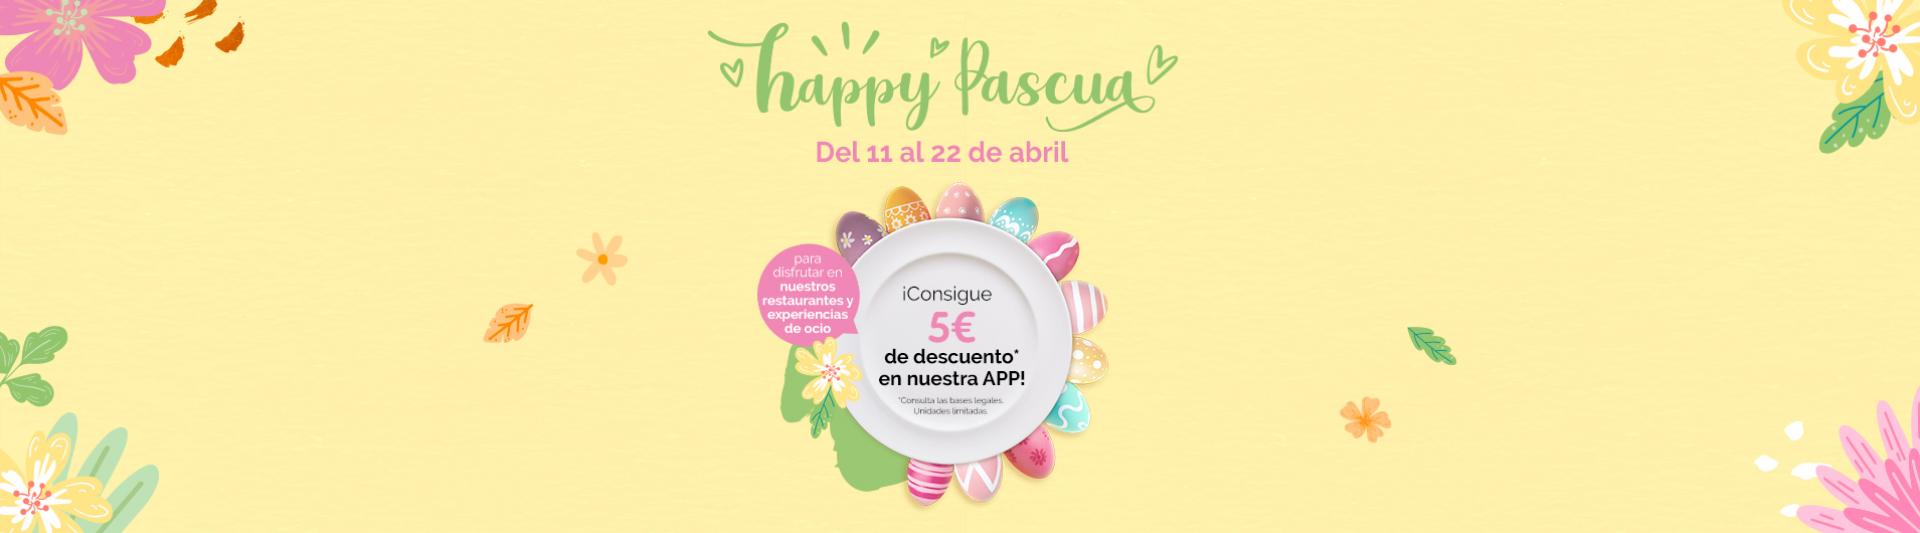 happy-pascua-post.jpg